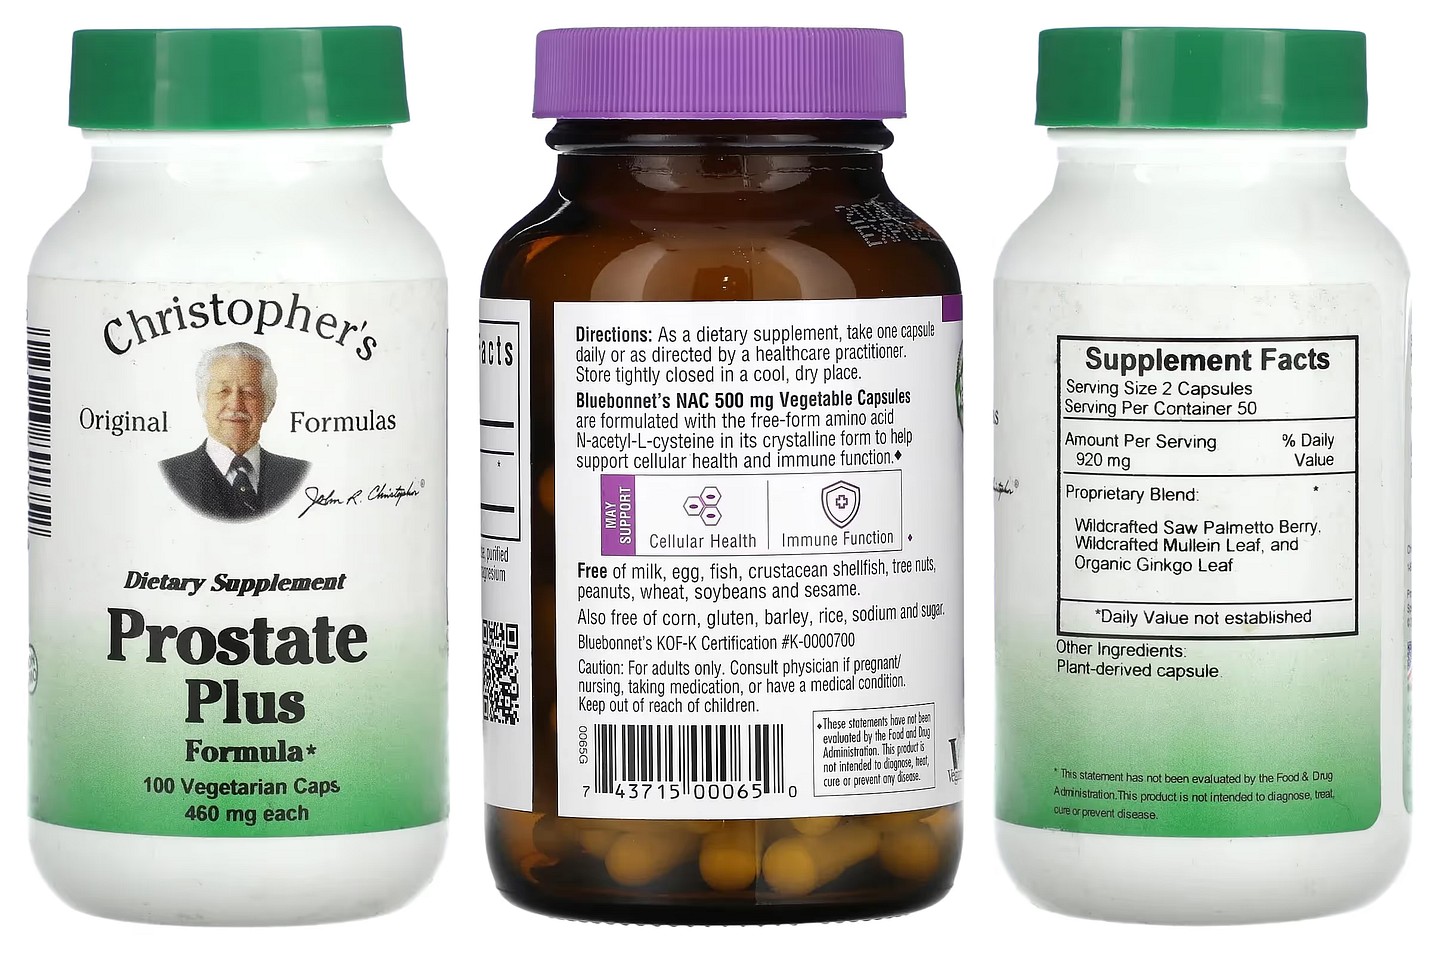 Dr. Christopher's, Prostate Plus Formula packaging